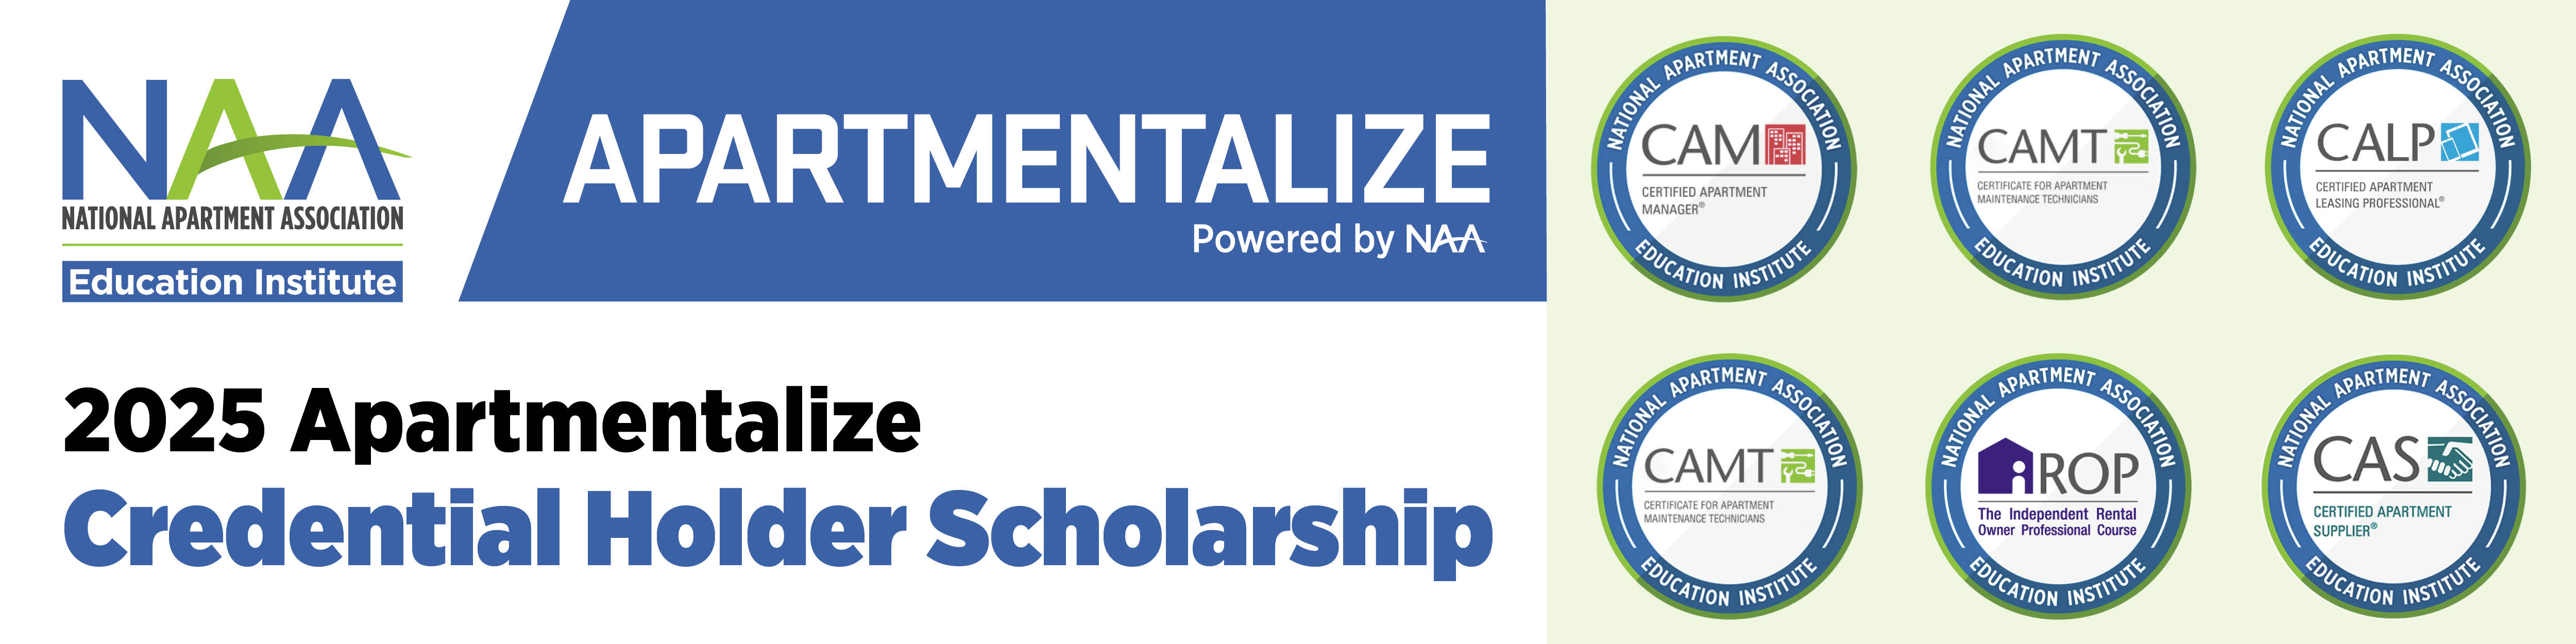 2025 Apartmentalize Credential Holder Scholarship Web Banner